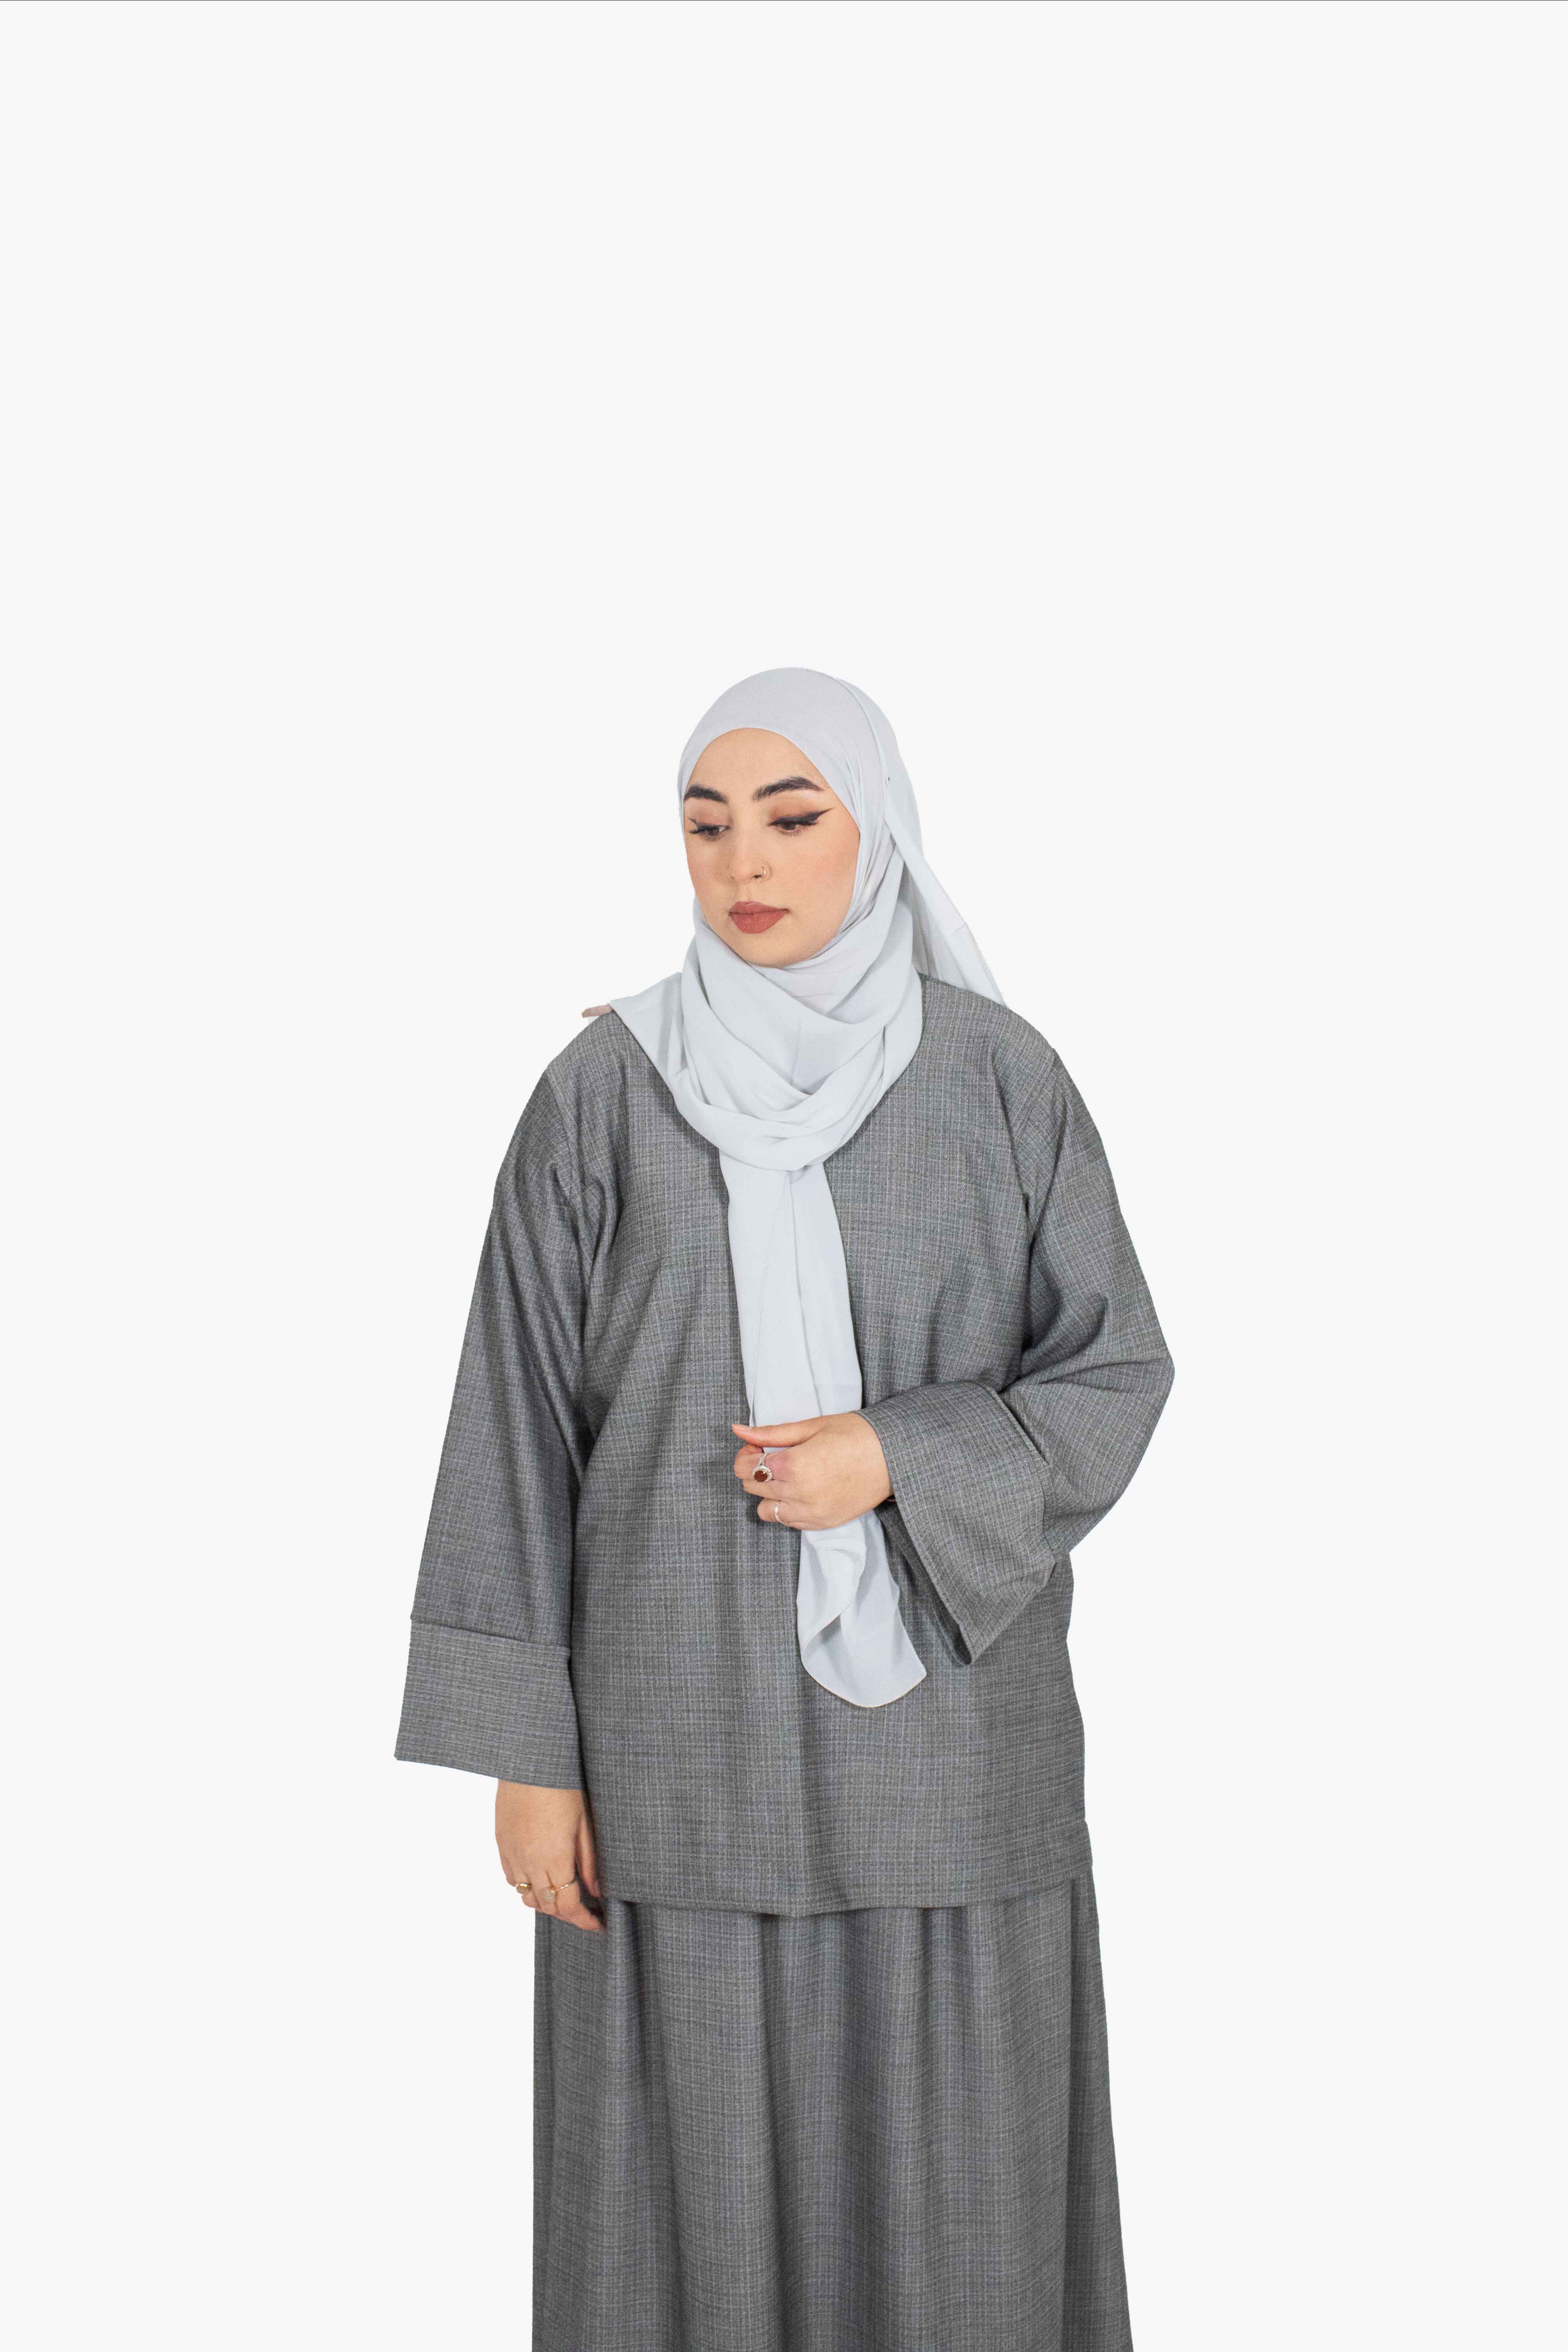 Textured Grey Two-Piece Abaya